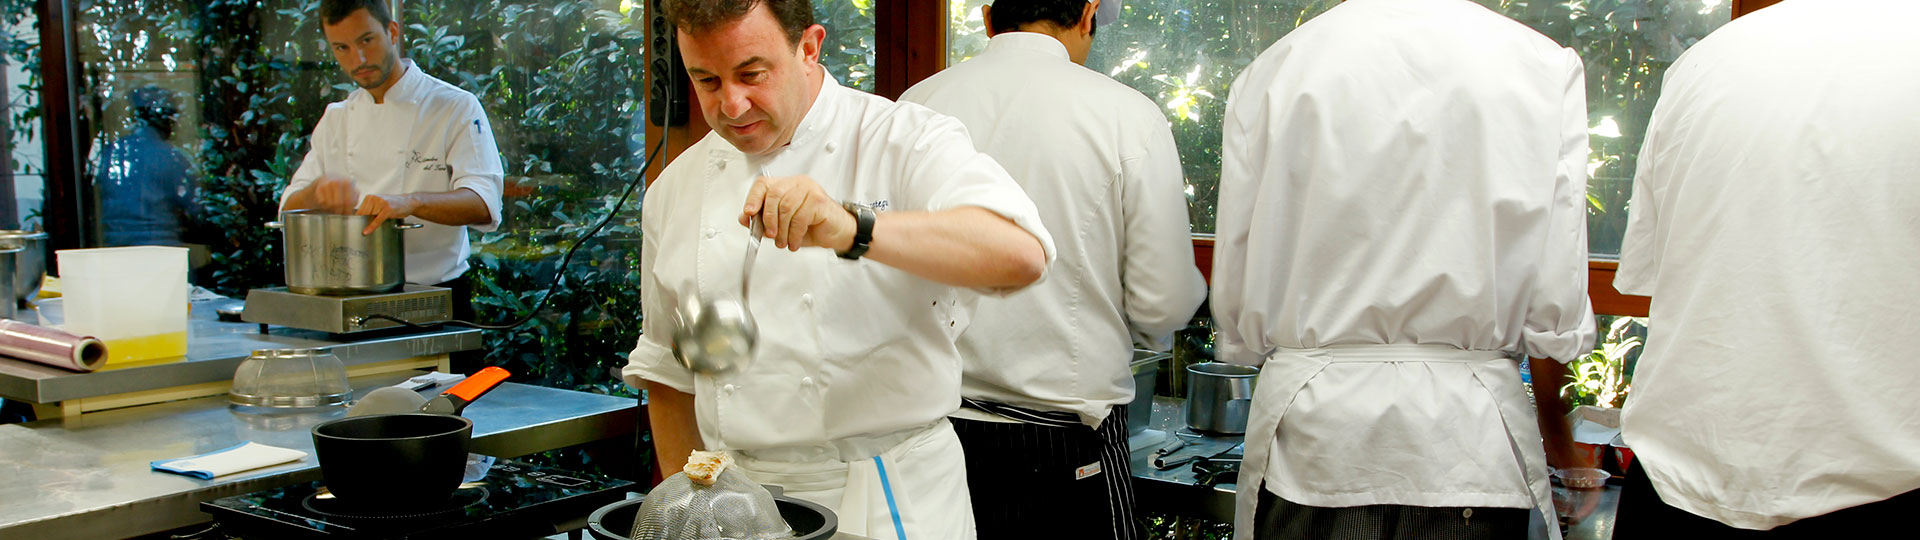 The Spanish chef Martín Berasategui cooking